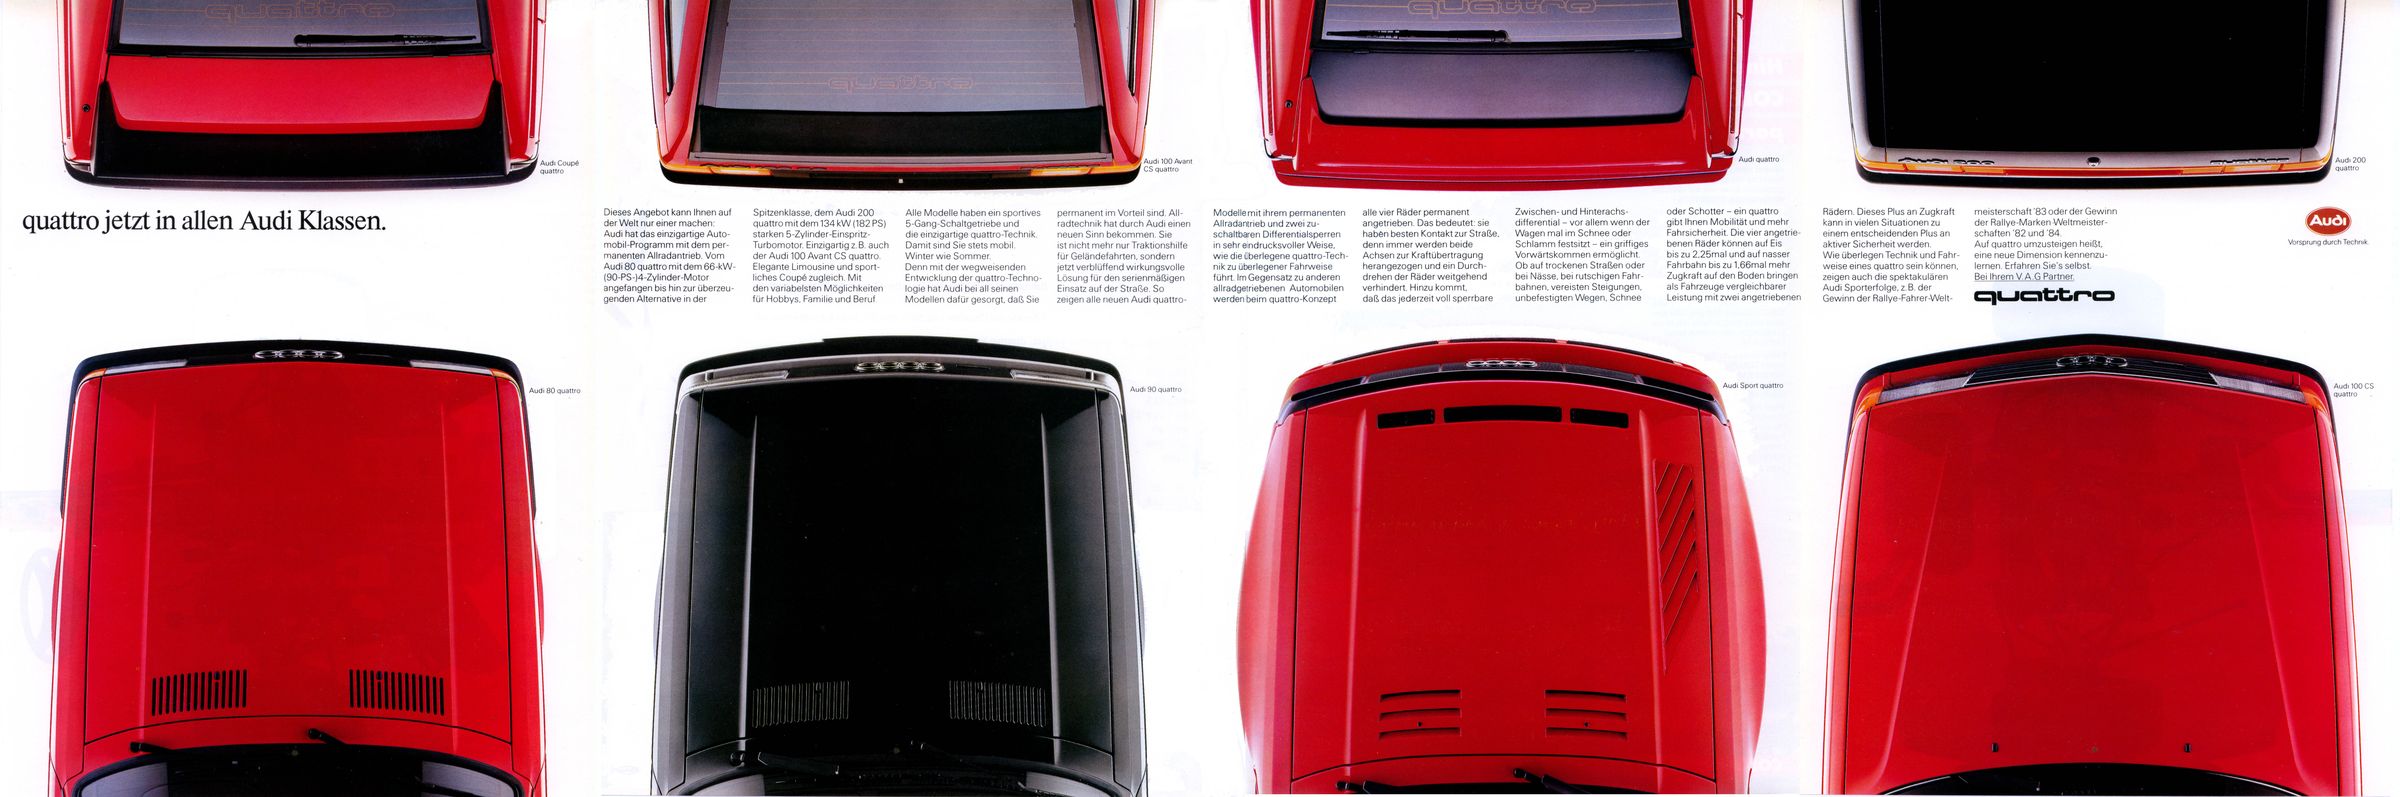 Audi quattros ams 1984-23-2 2400.jpg